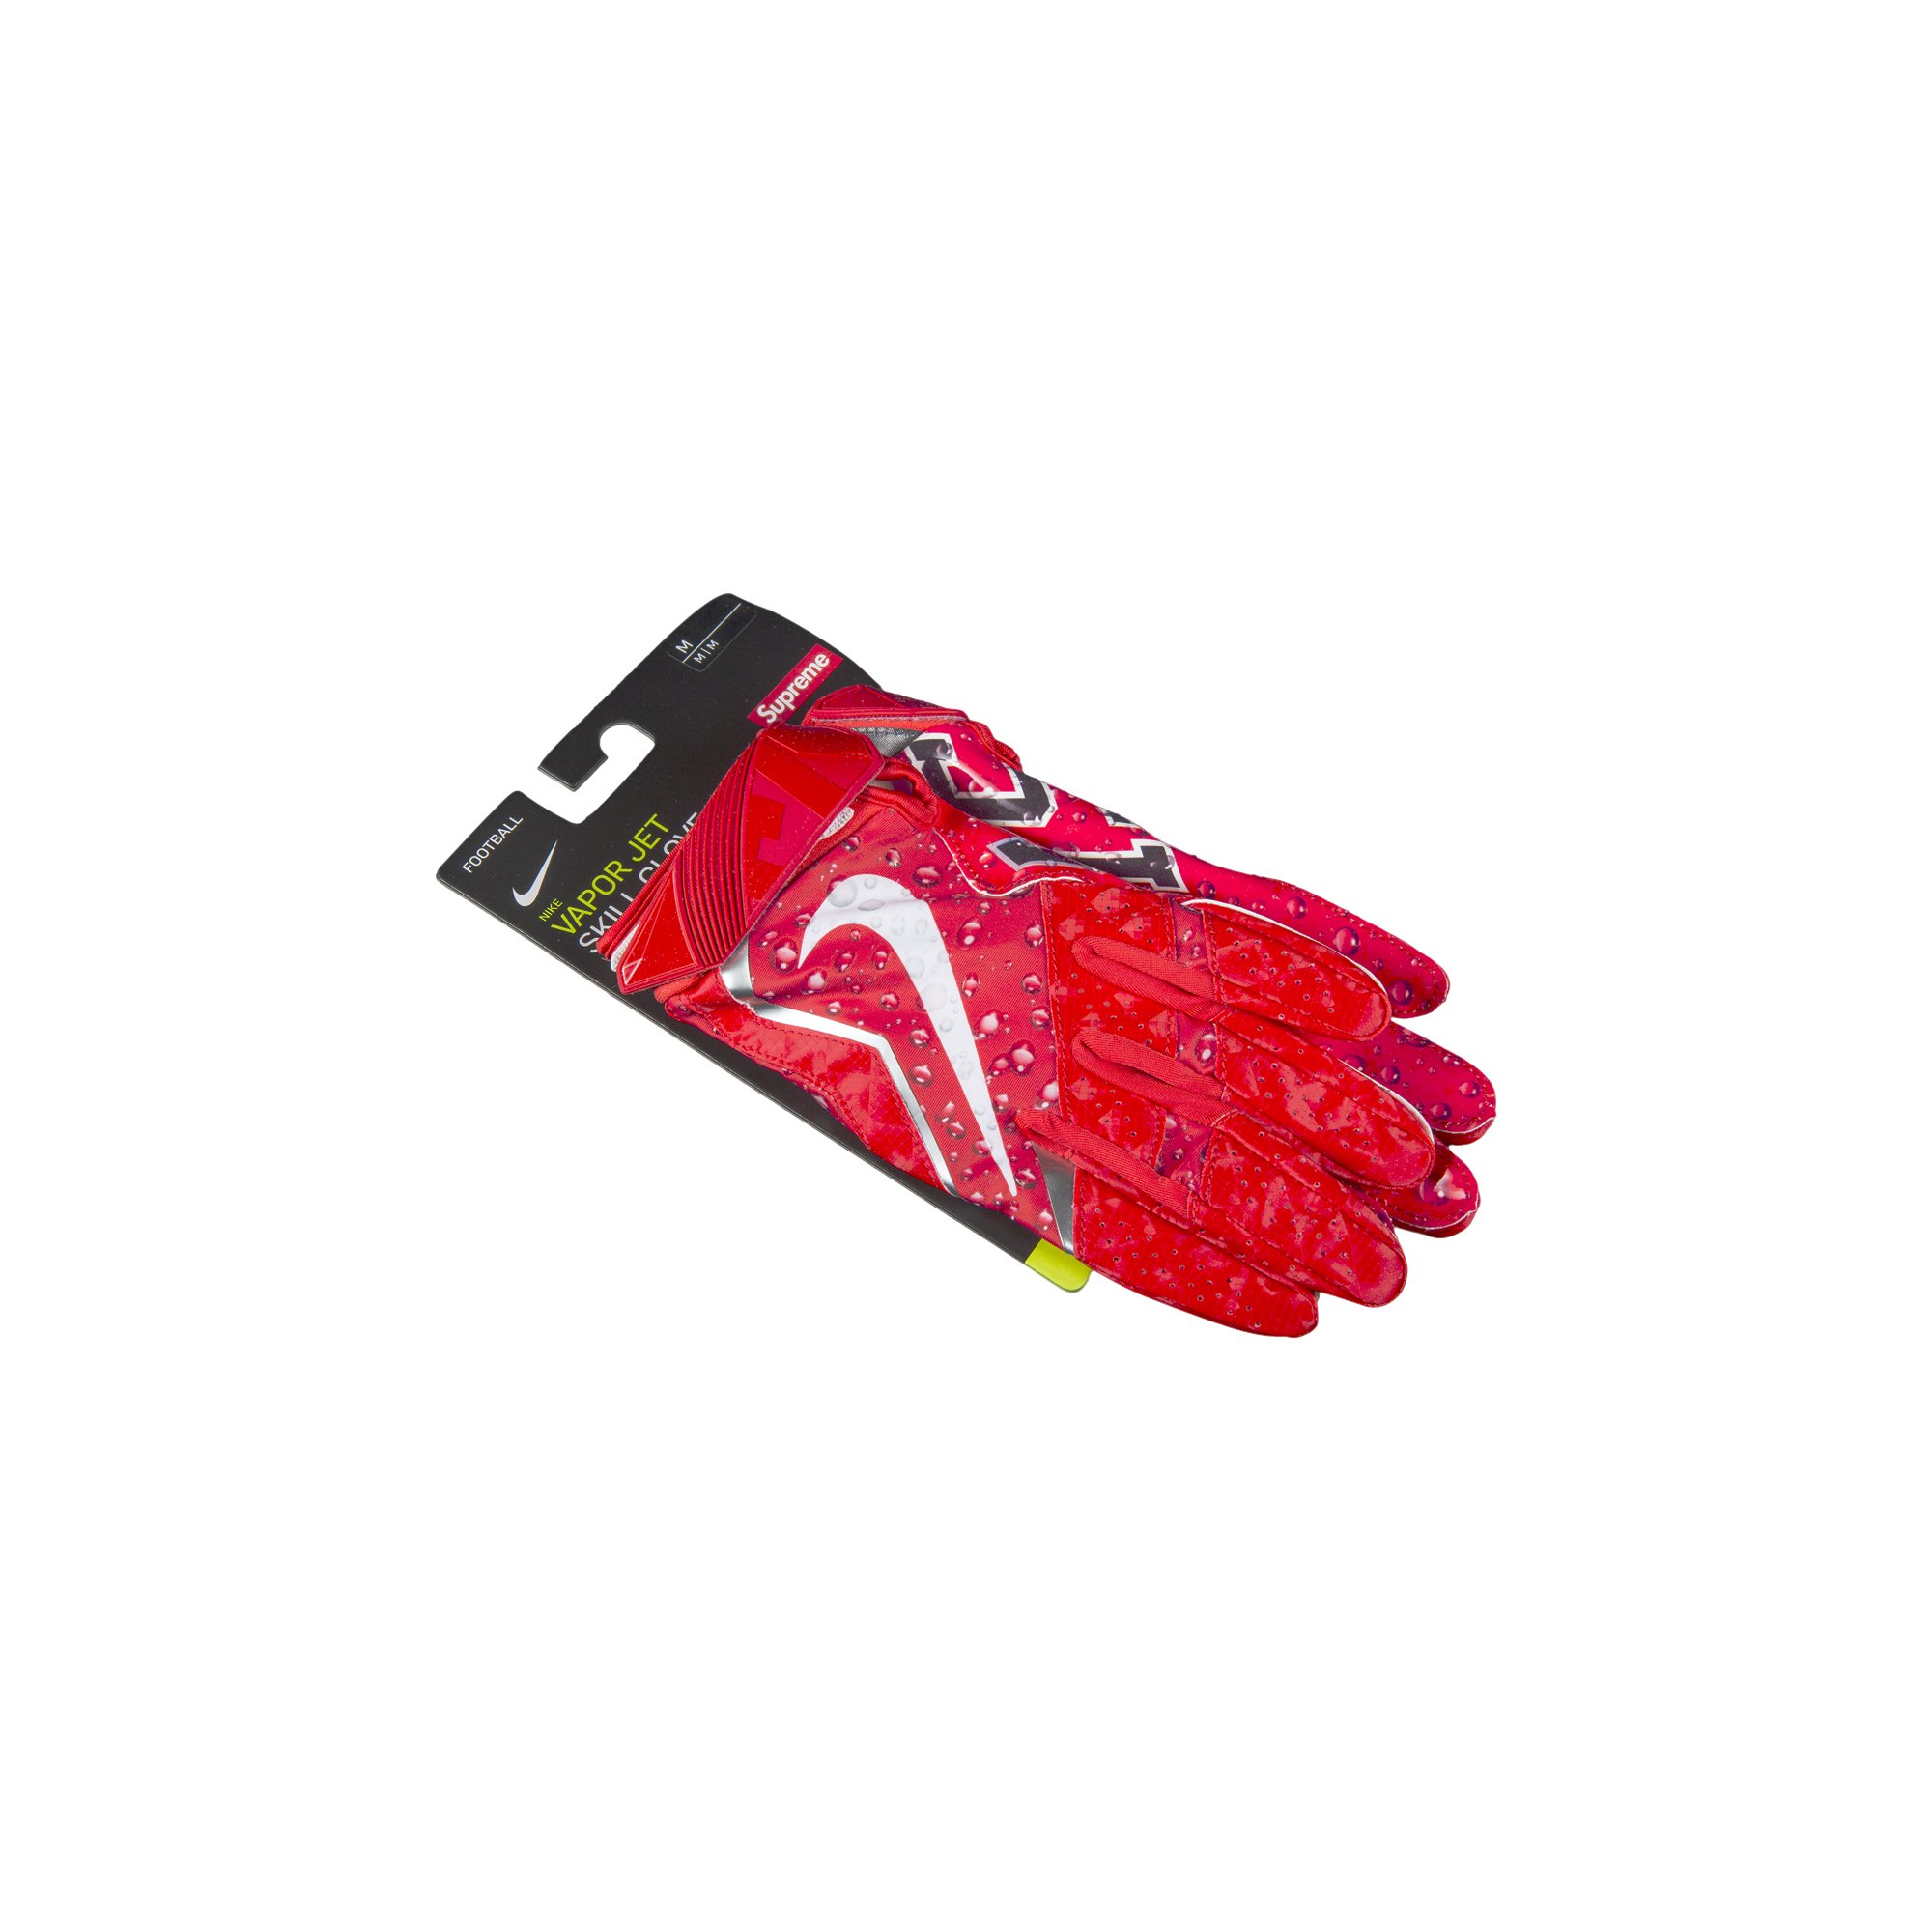 Supreme x Nike Vapor Jet 4.0 Football Gloves 'Red'